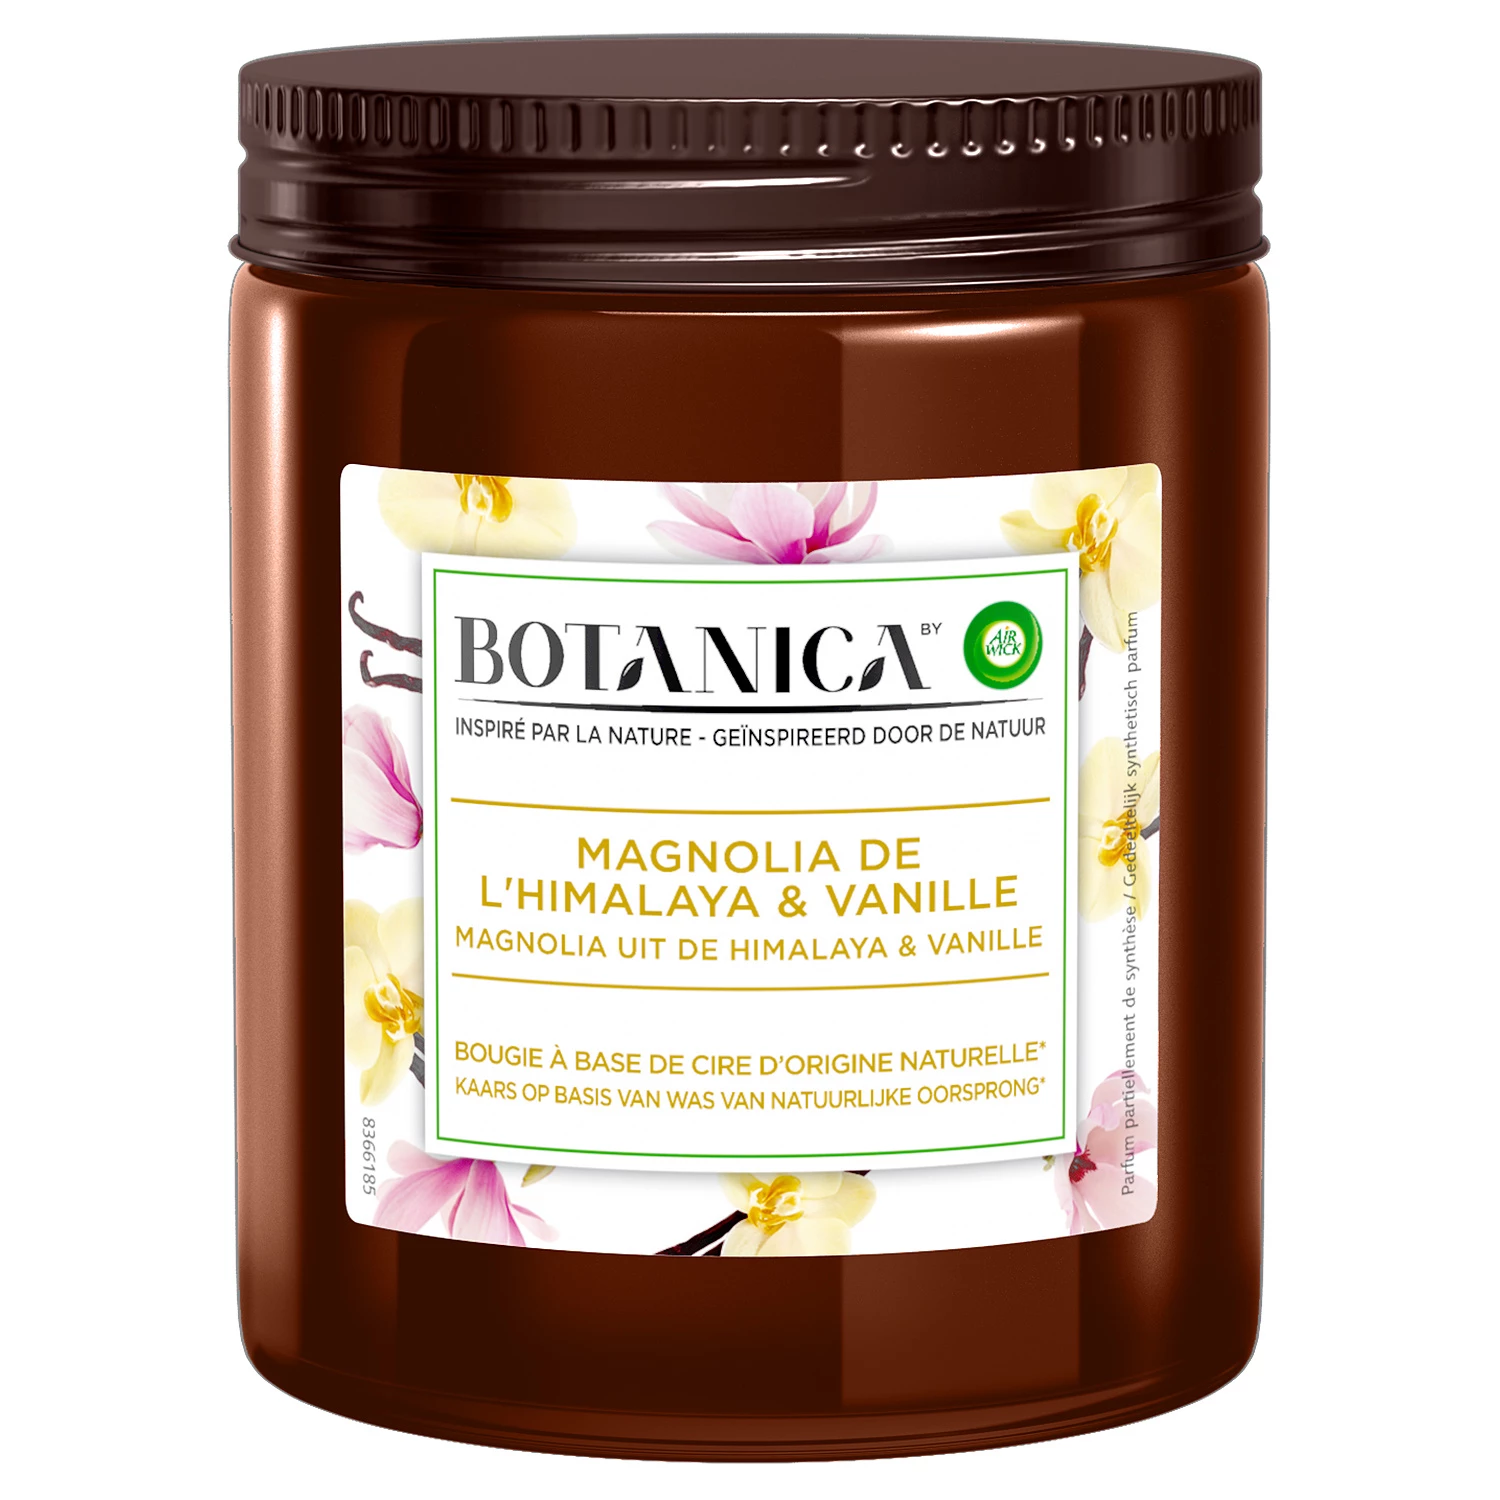 Magnolia Vanilla scented botanica candle - AIR WICK